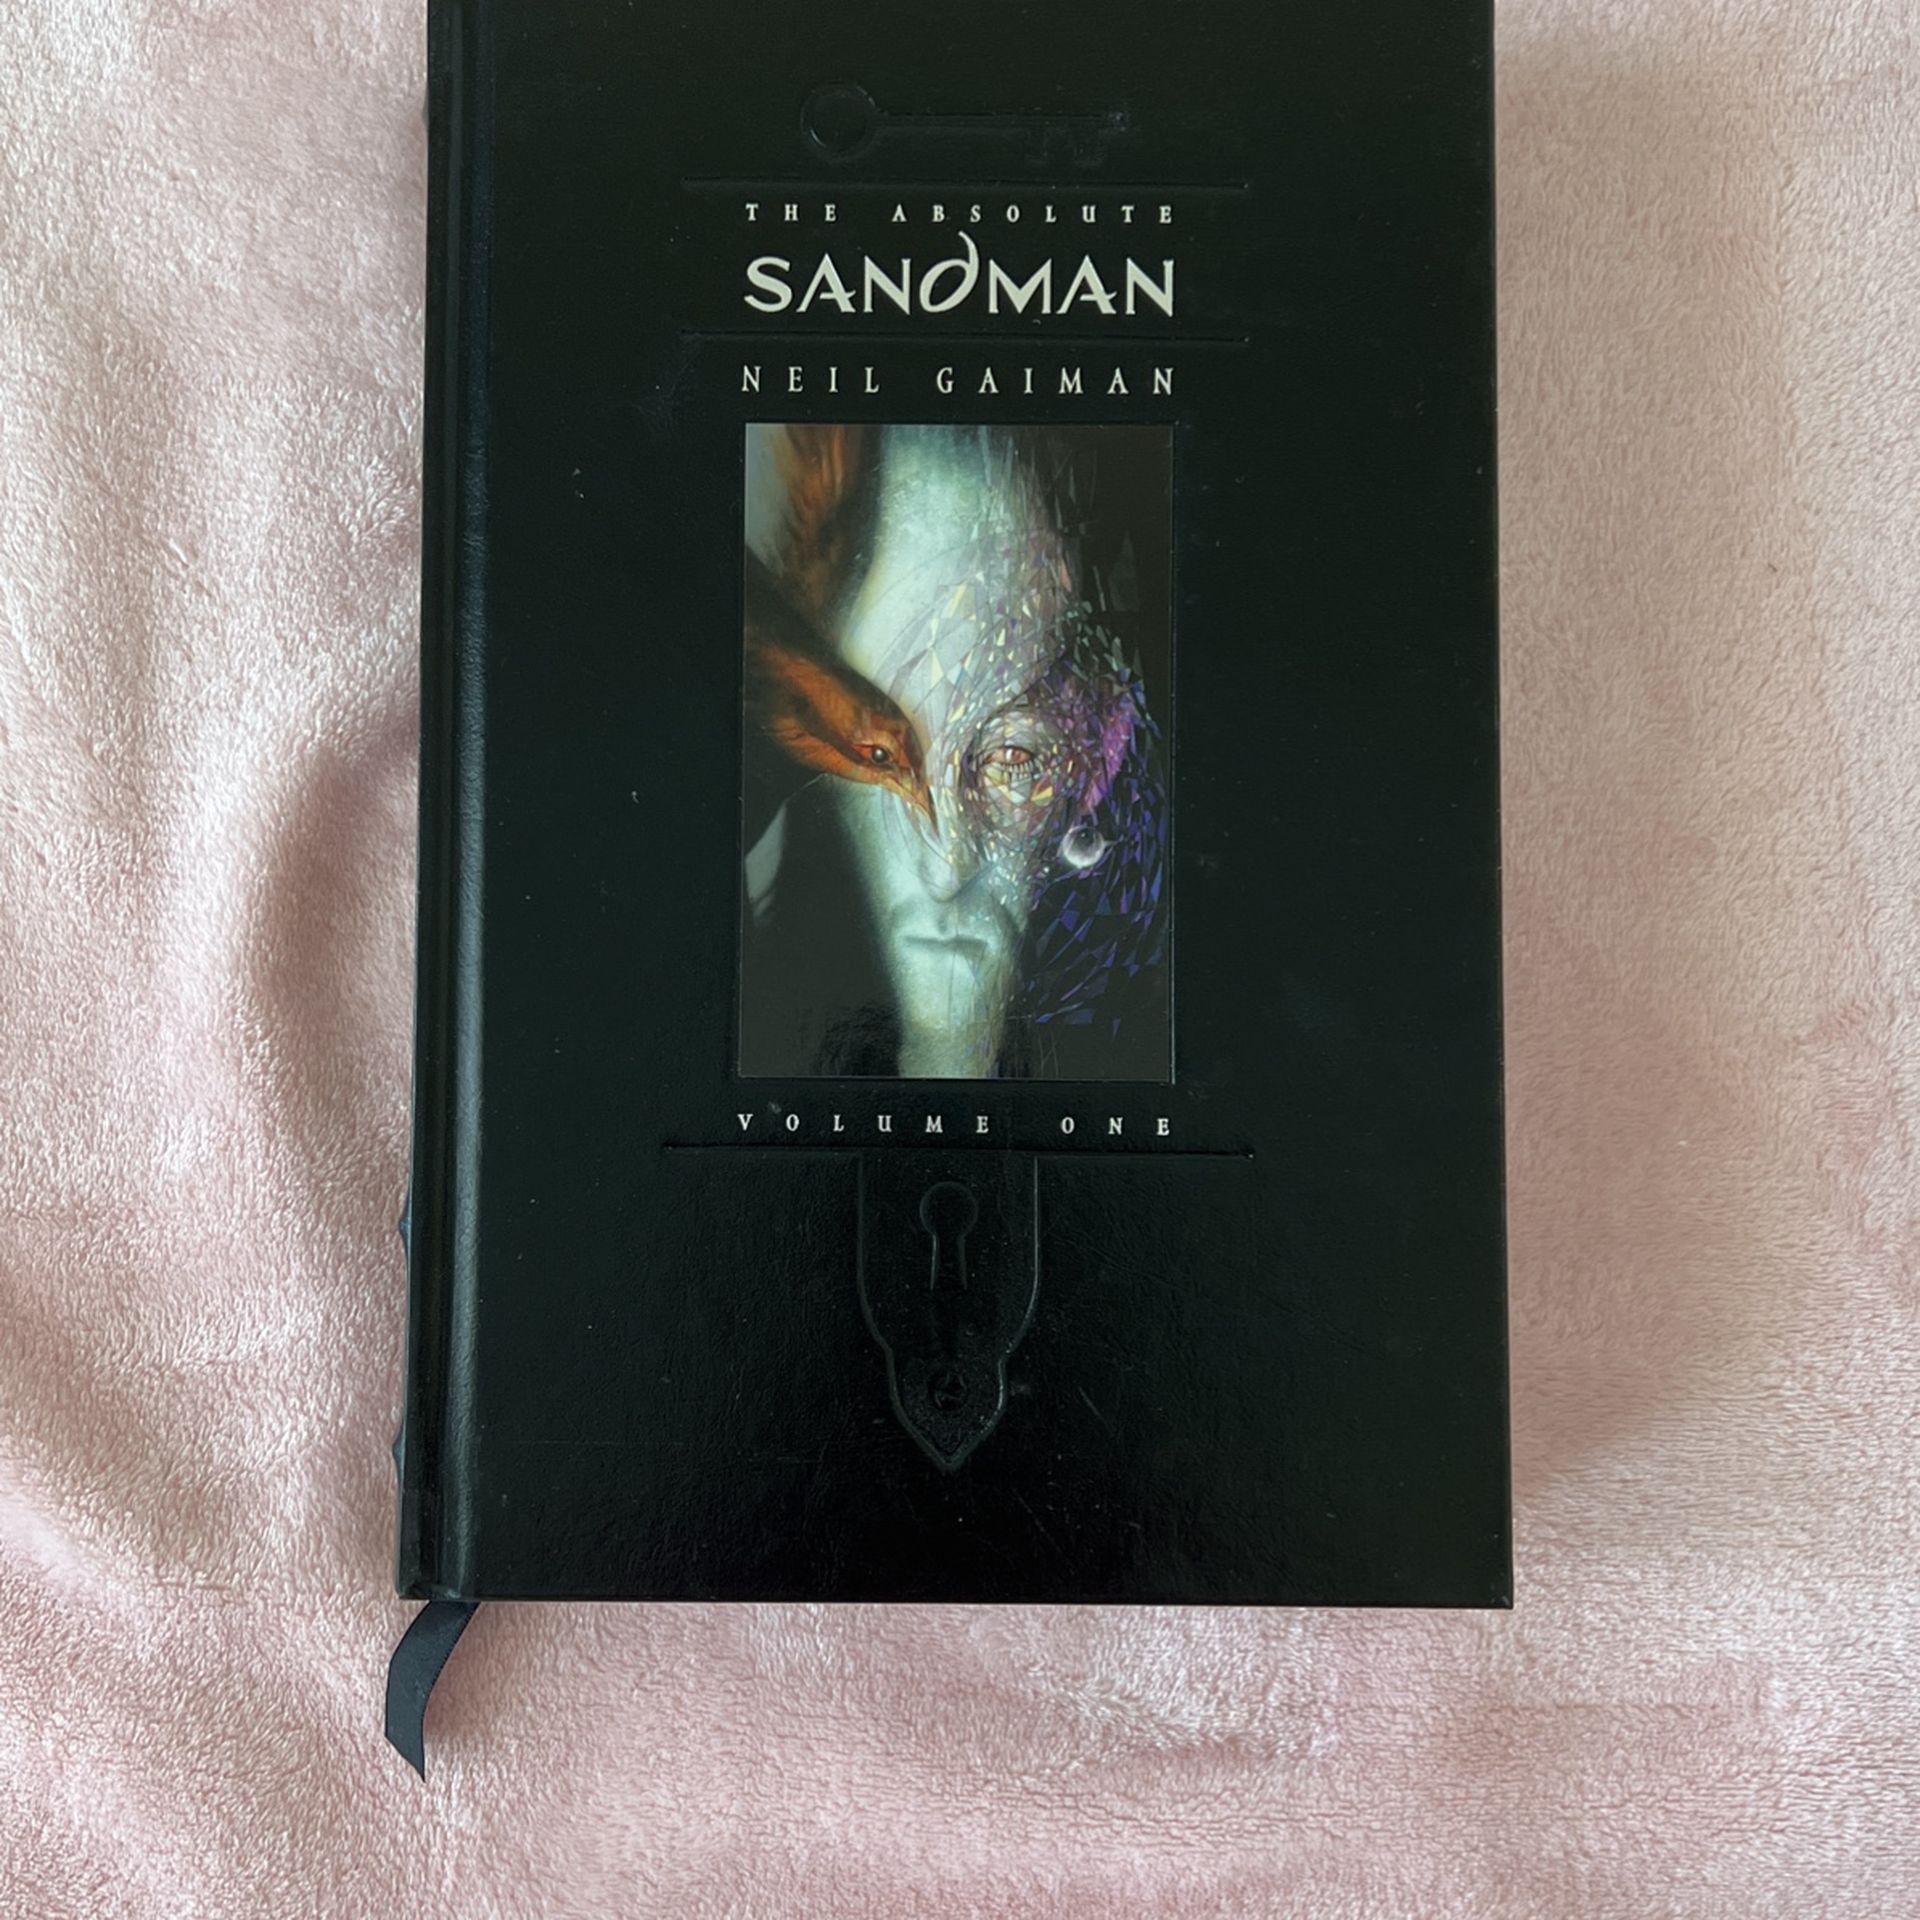 The Absolute Sandman Volume #1 By Neil Gaiman